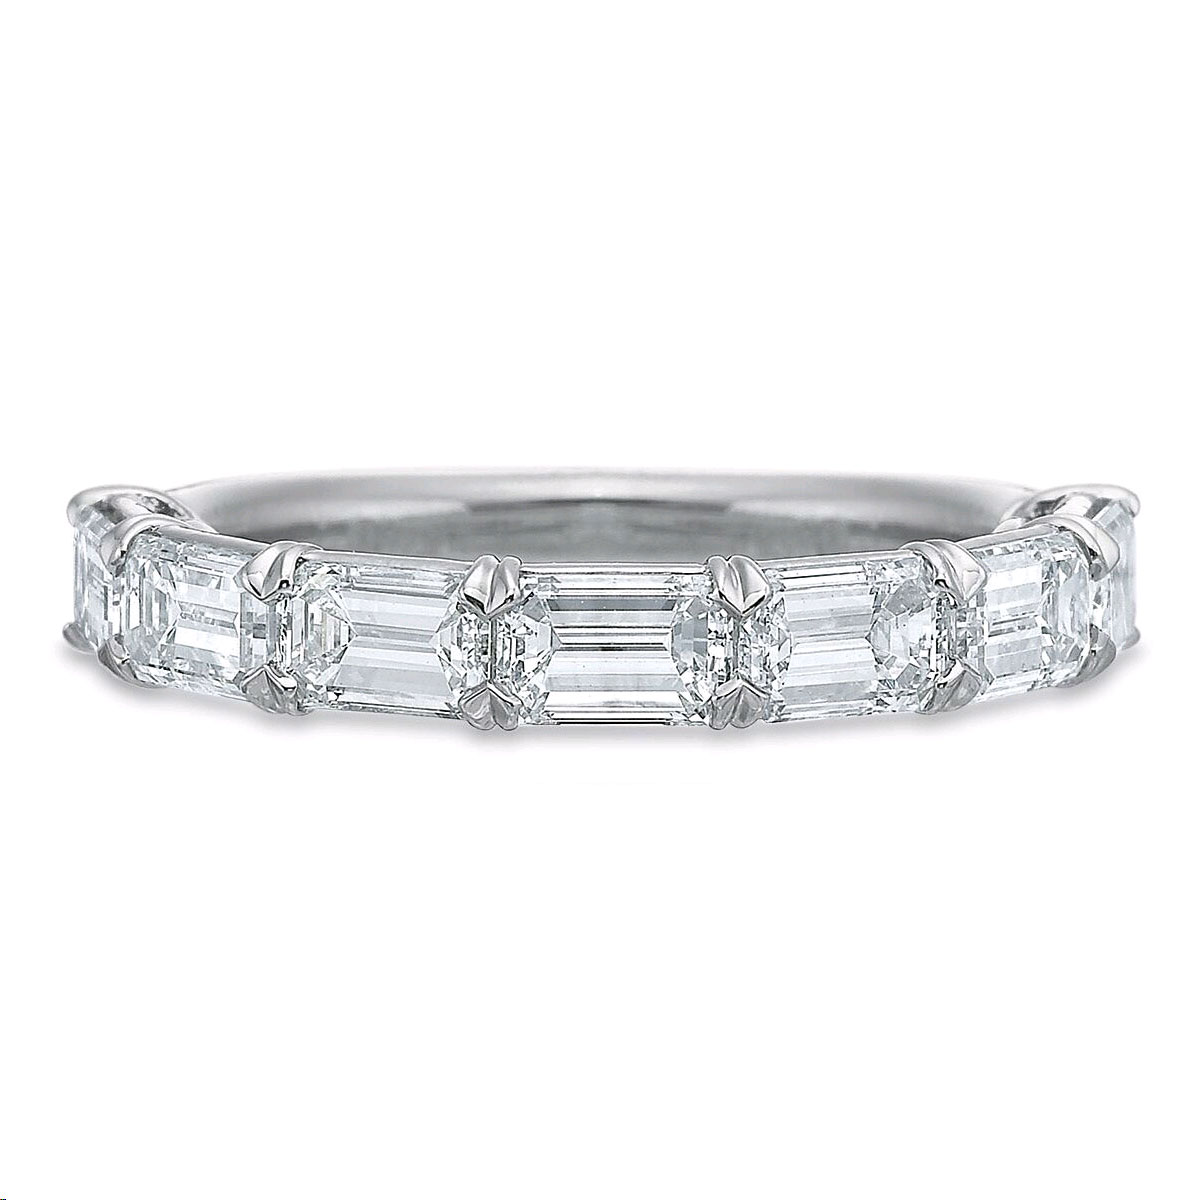 3 00 Ct Emerald Cut Diamond Engagement Bridal Ring Set 14k White Gold Over Ebay